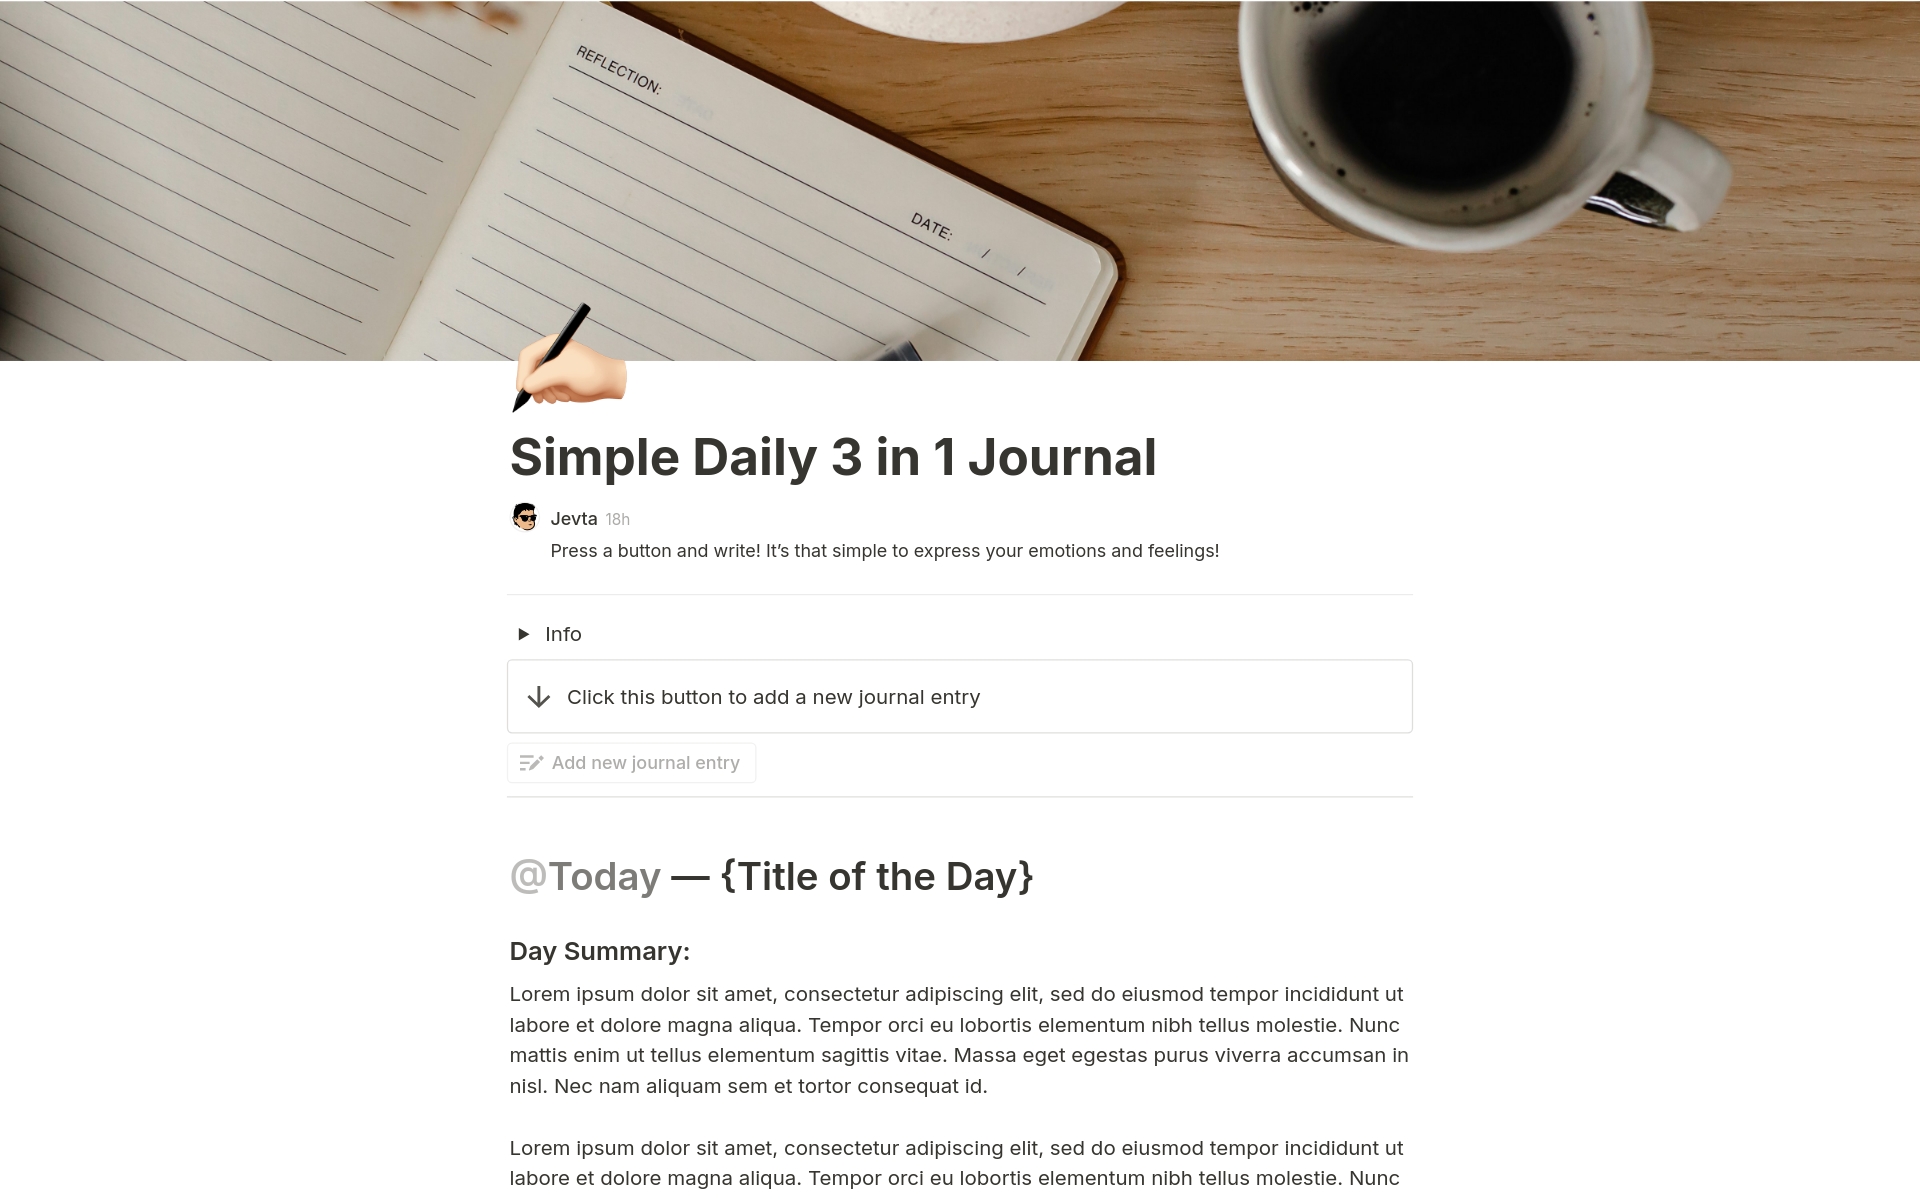 Simple Daily 3 in 1 Journal님의 템플릿 미리보기